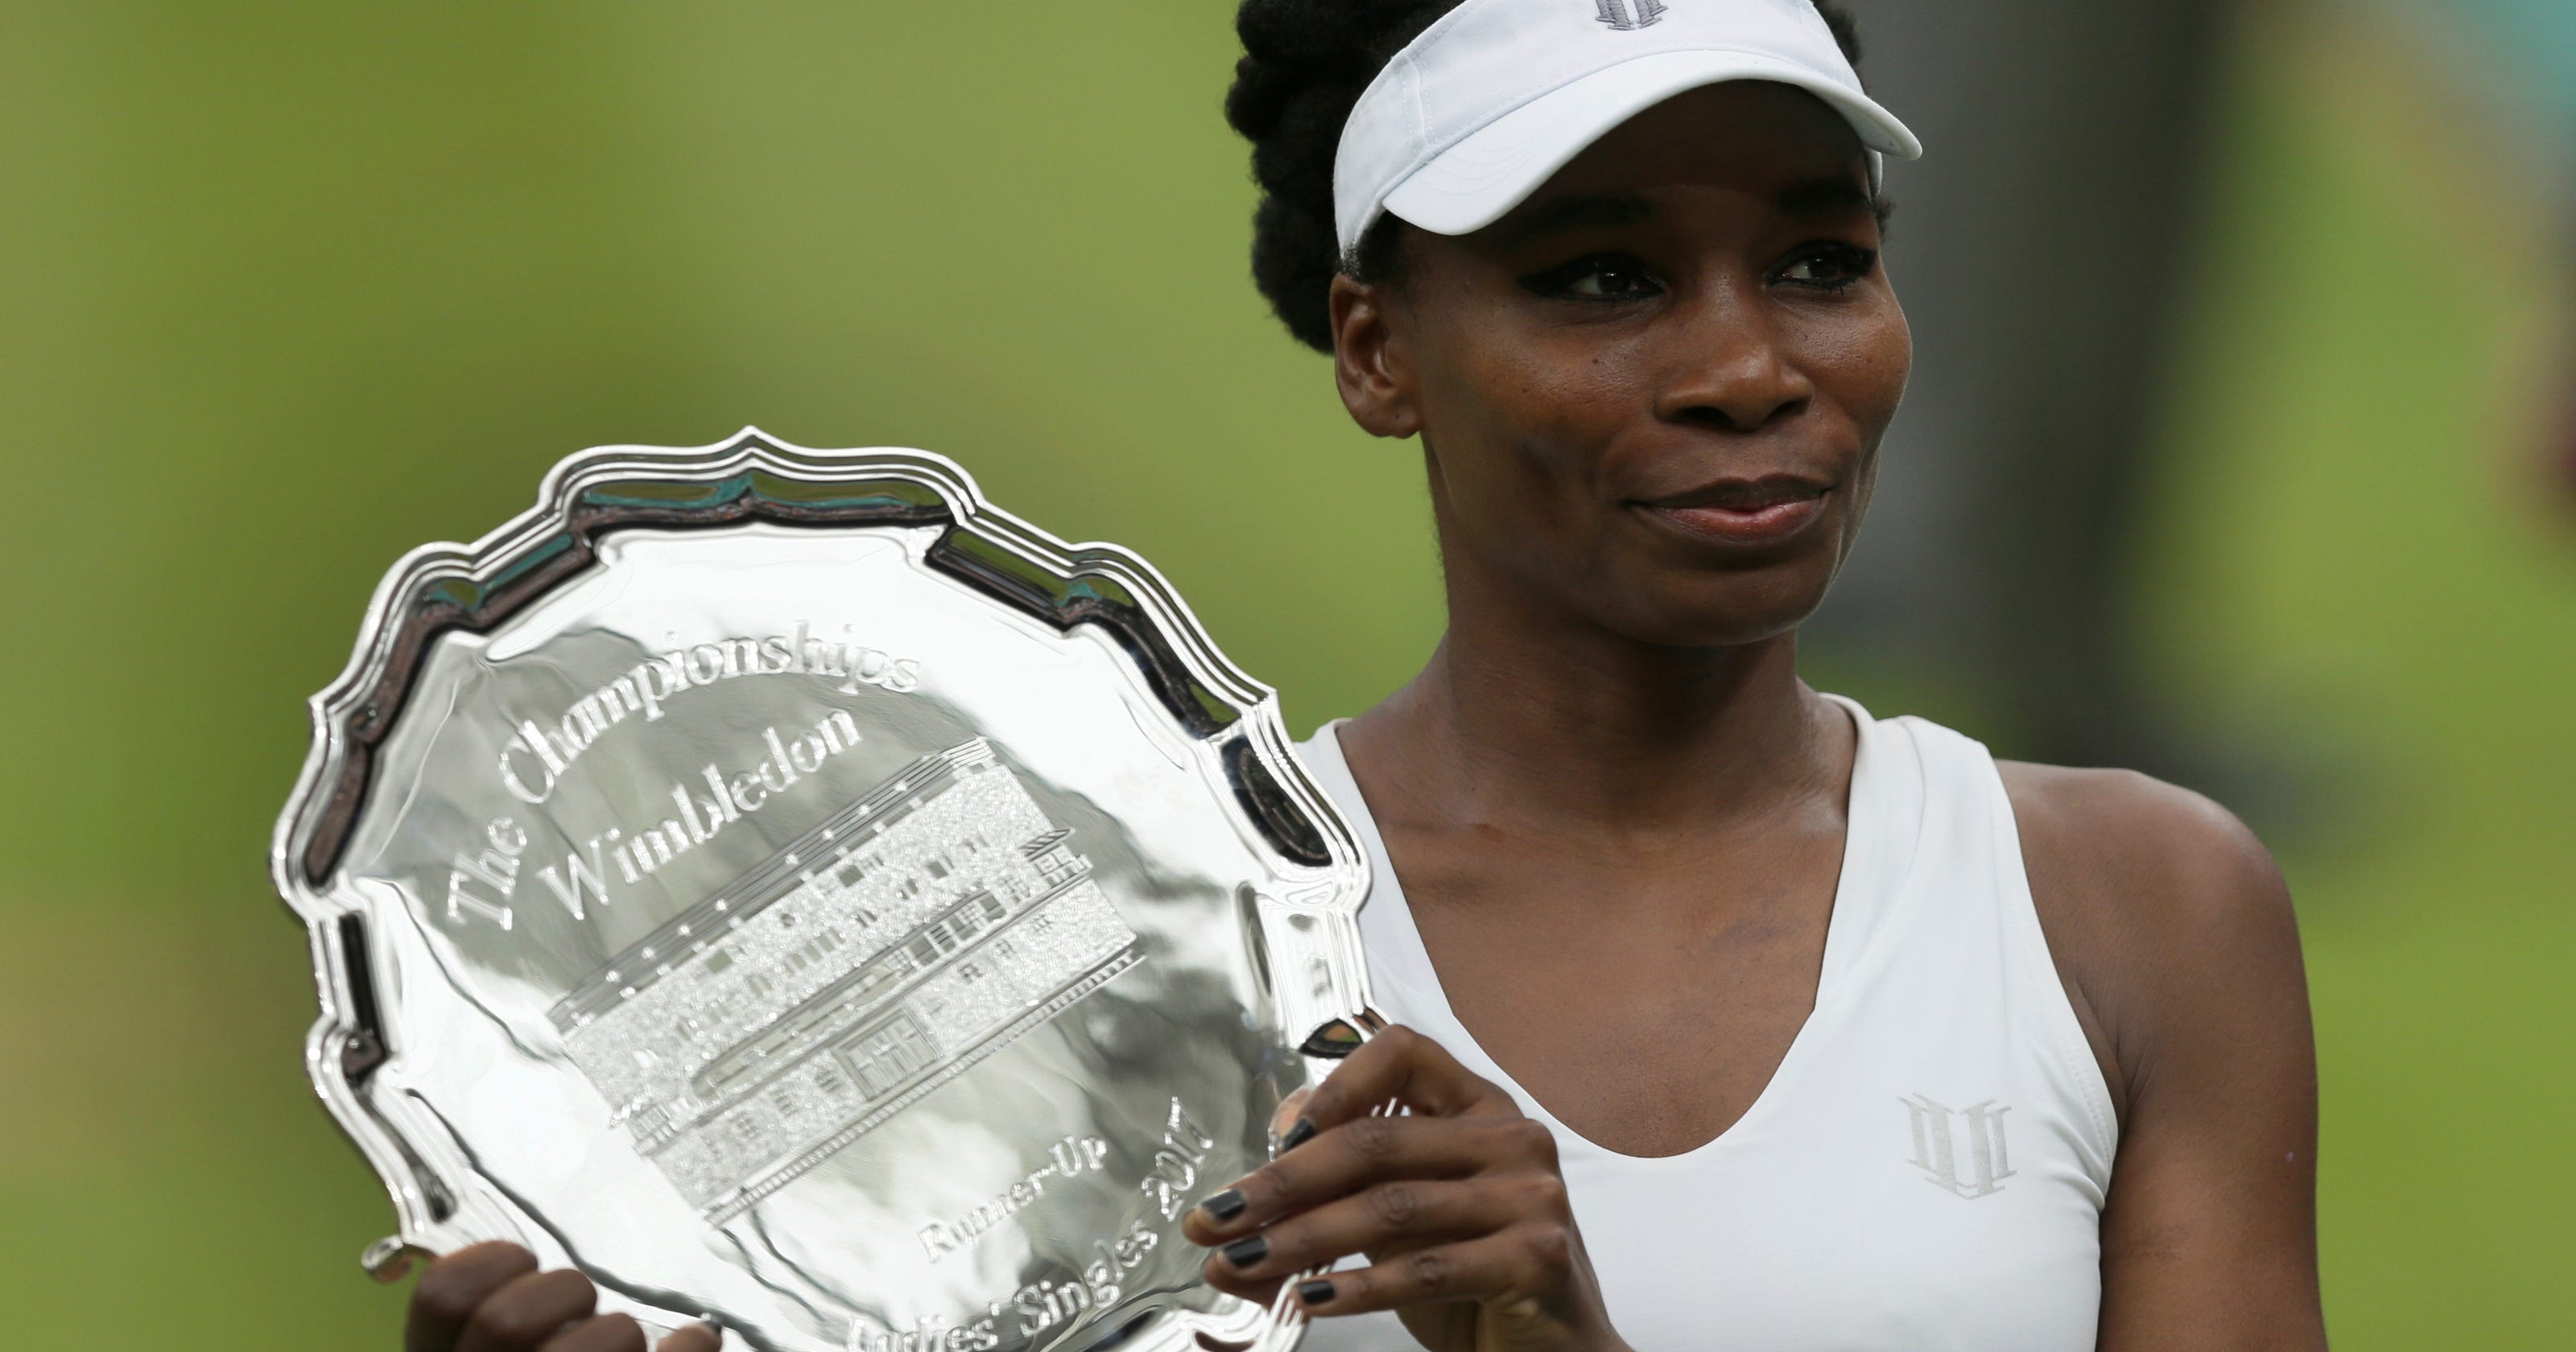 Venus Williams falls short of 6th Wimbledon title at age 373200 x 1680